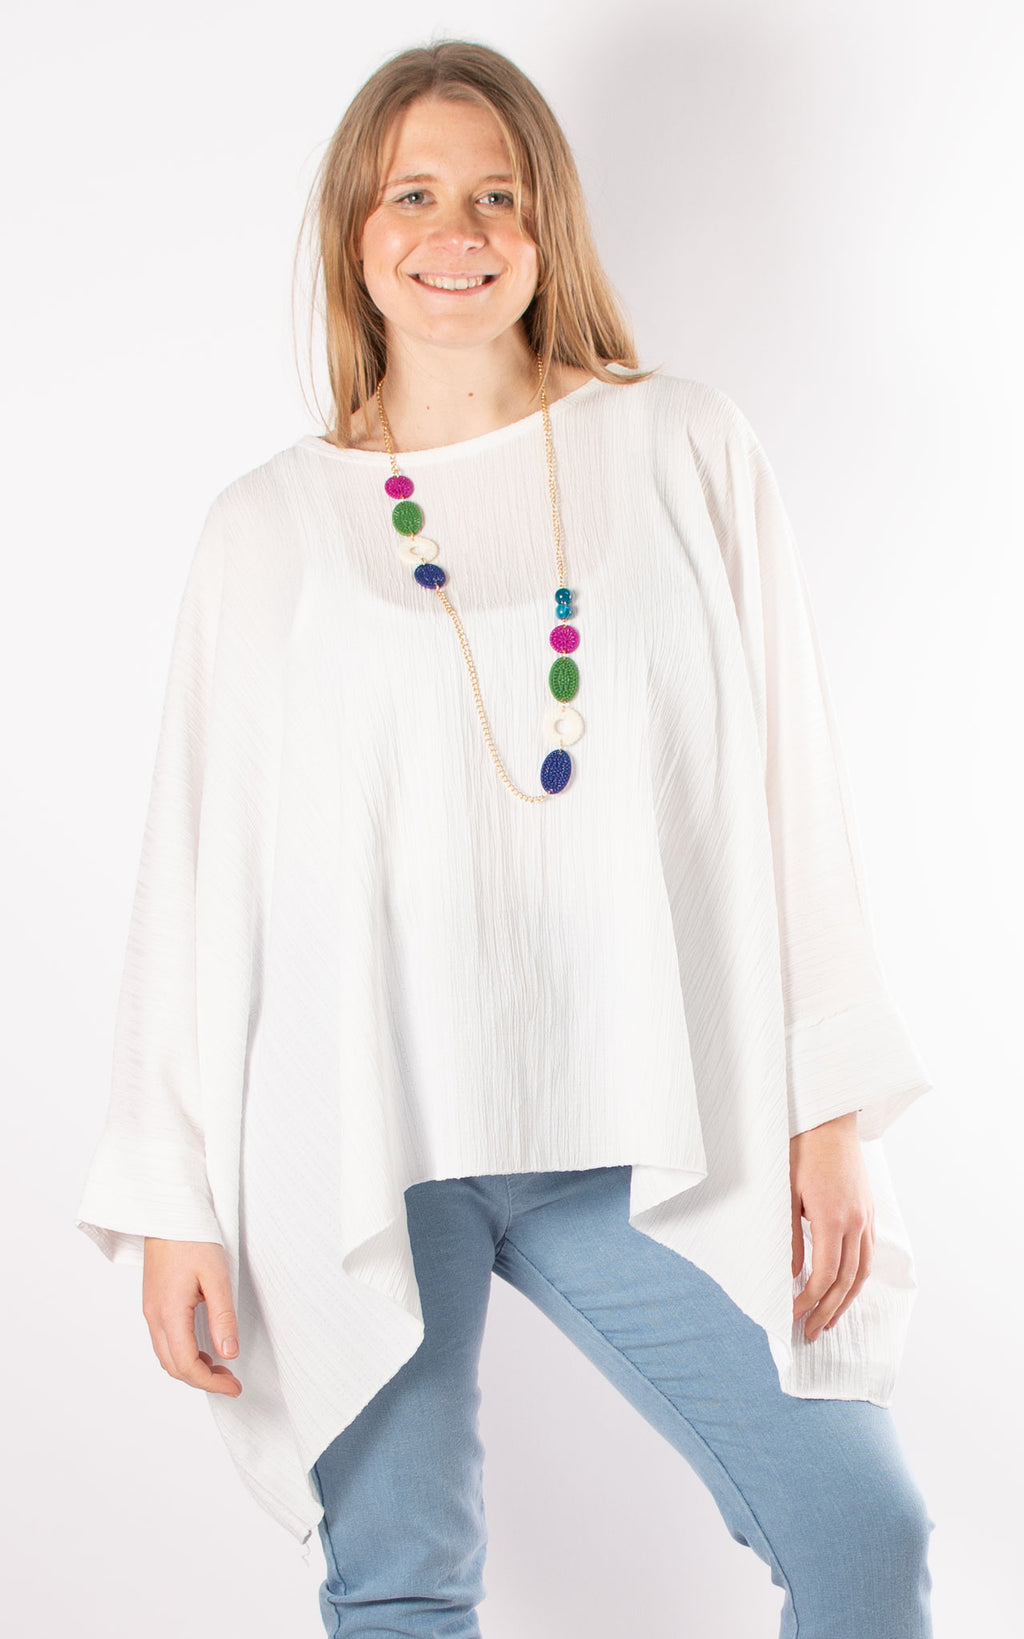 Zara Oversized Top | Winter White